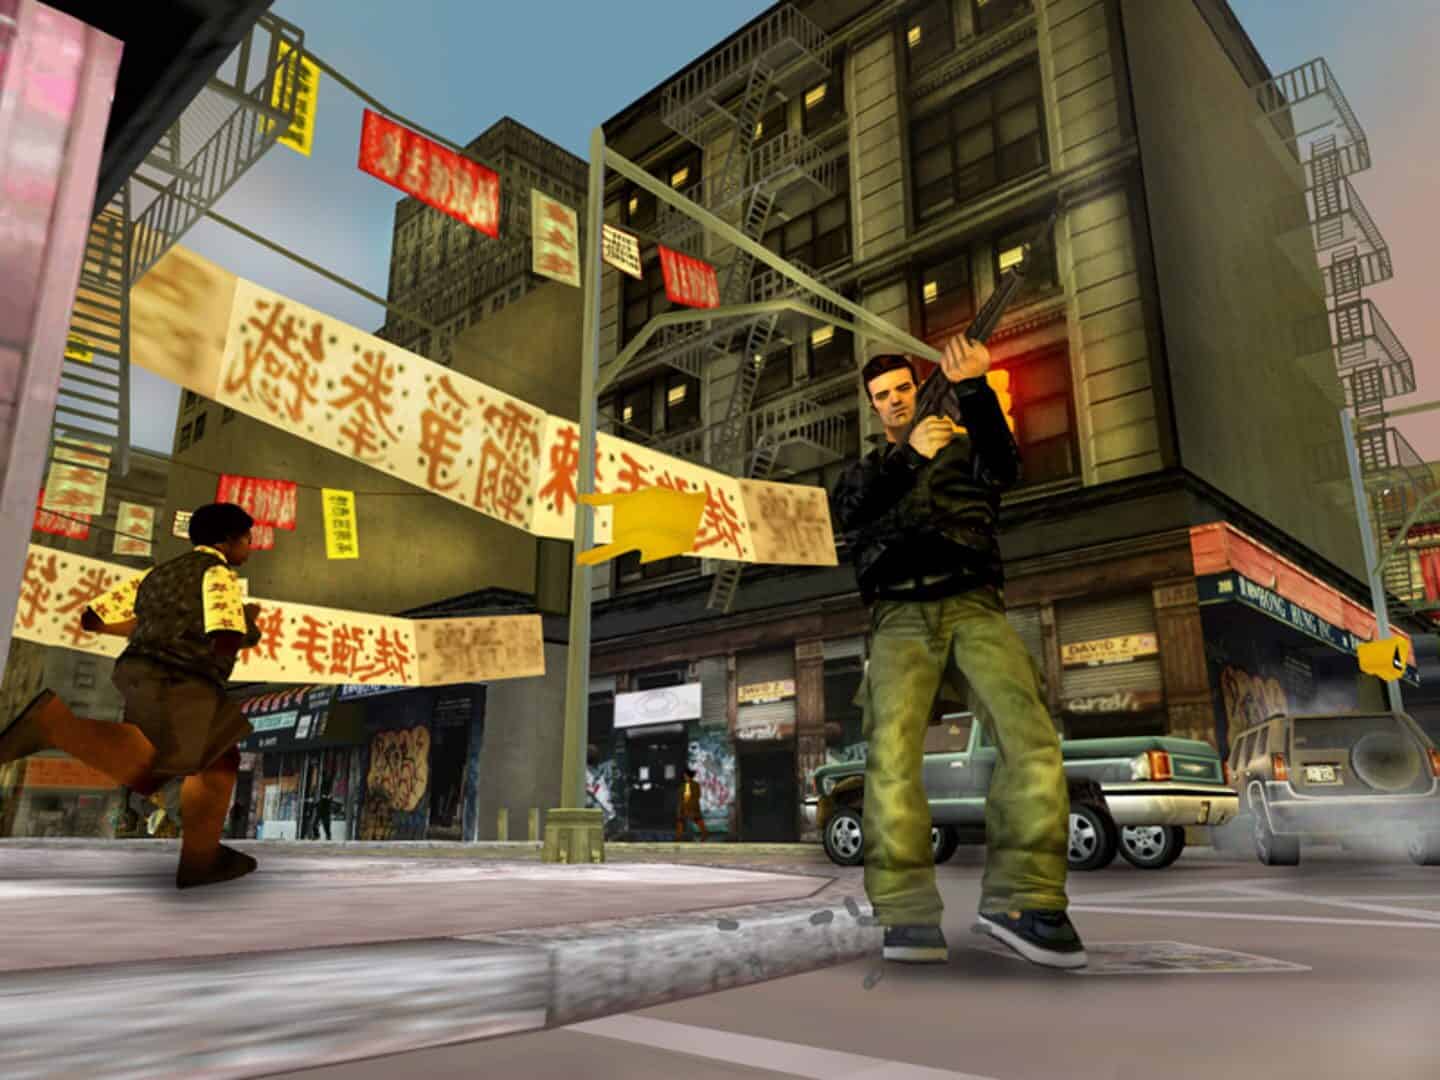 Grand Theft Auto: San Andreas Cheats, Codes, Cheat Codes, Walkthrough,  Guide, FAQ, Unlockables for PC - Cheat Code Central